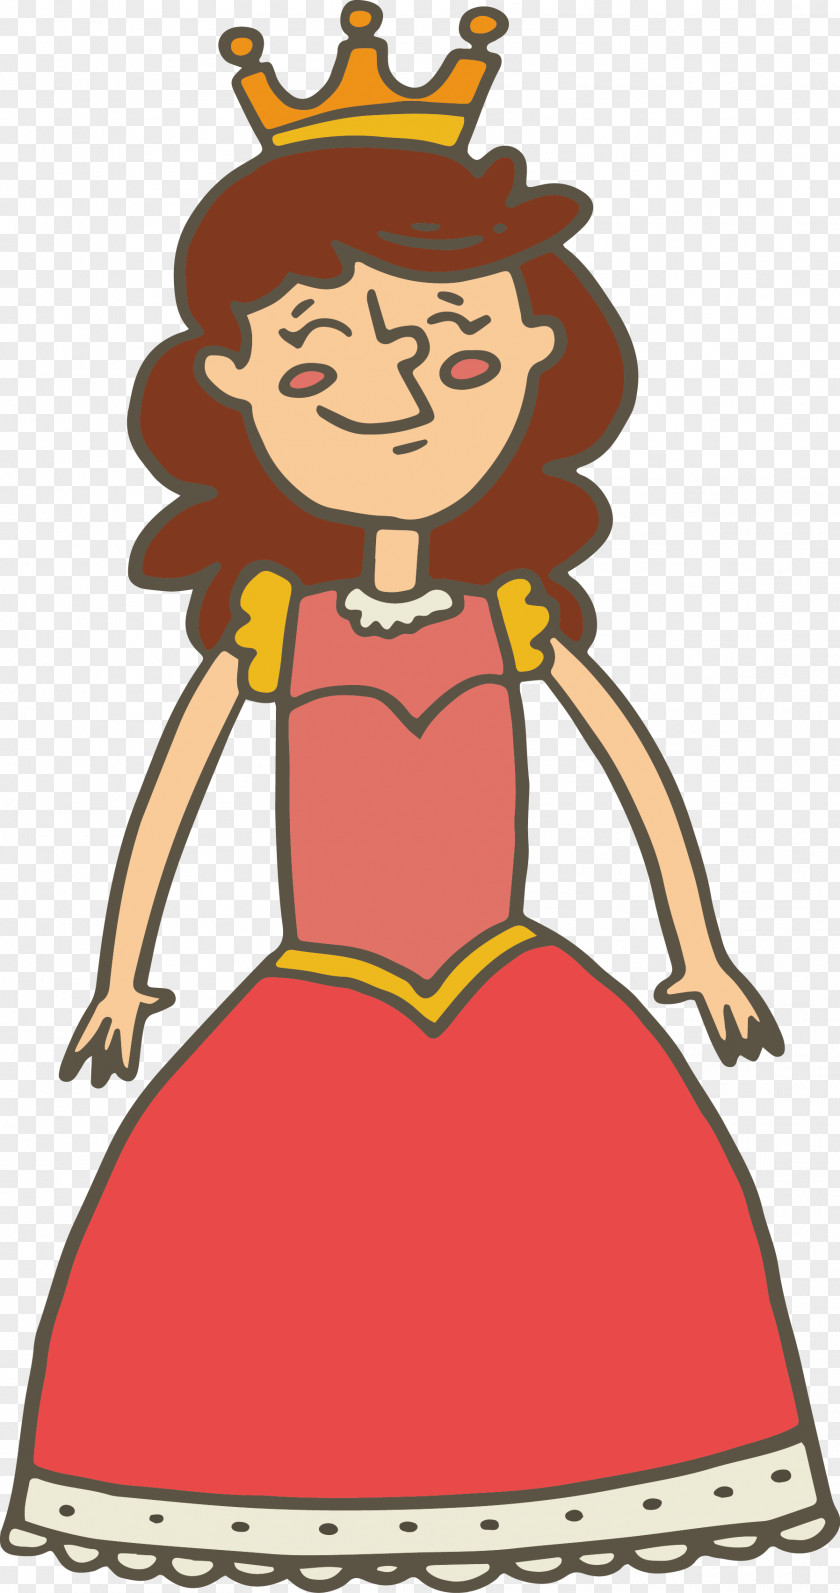 Cartoon Princess Fairy Tale Illustration PNG